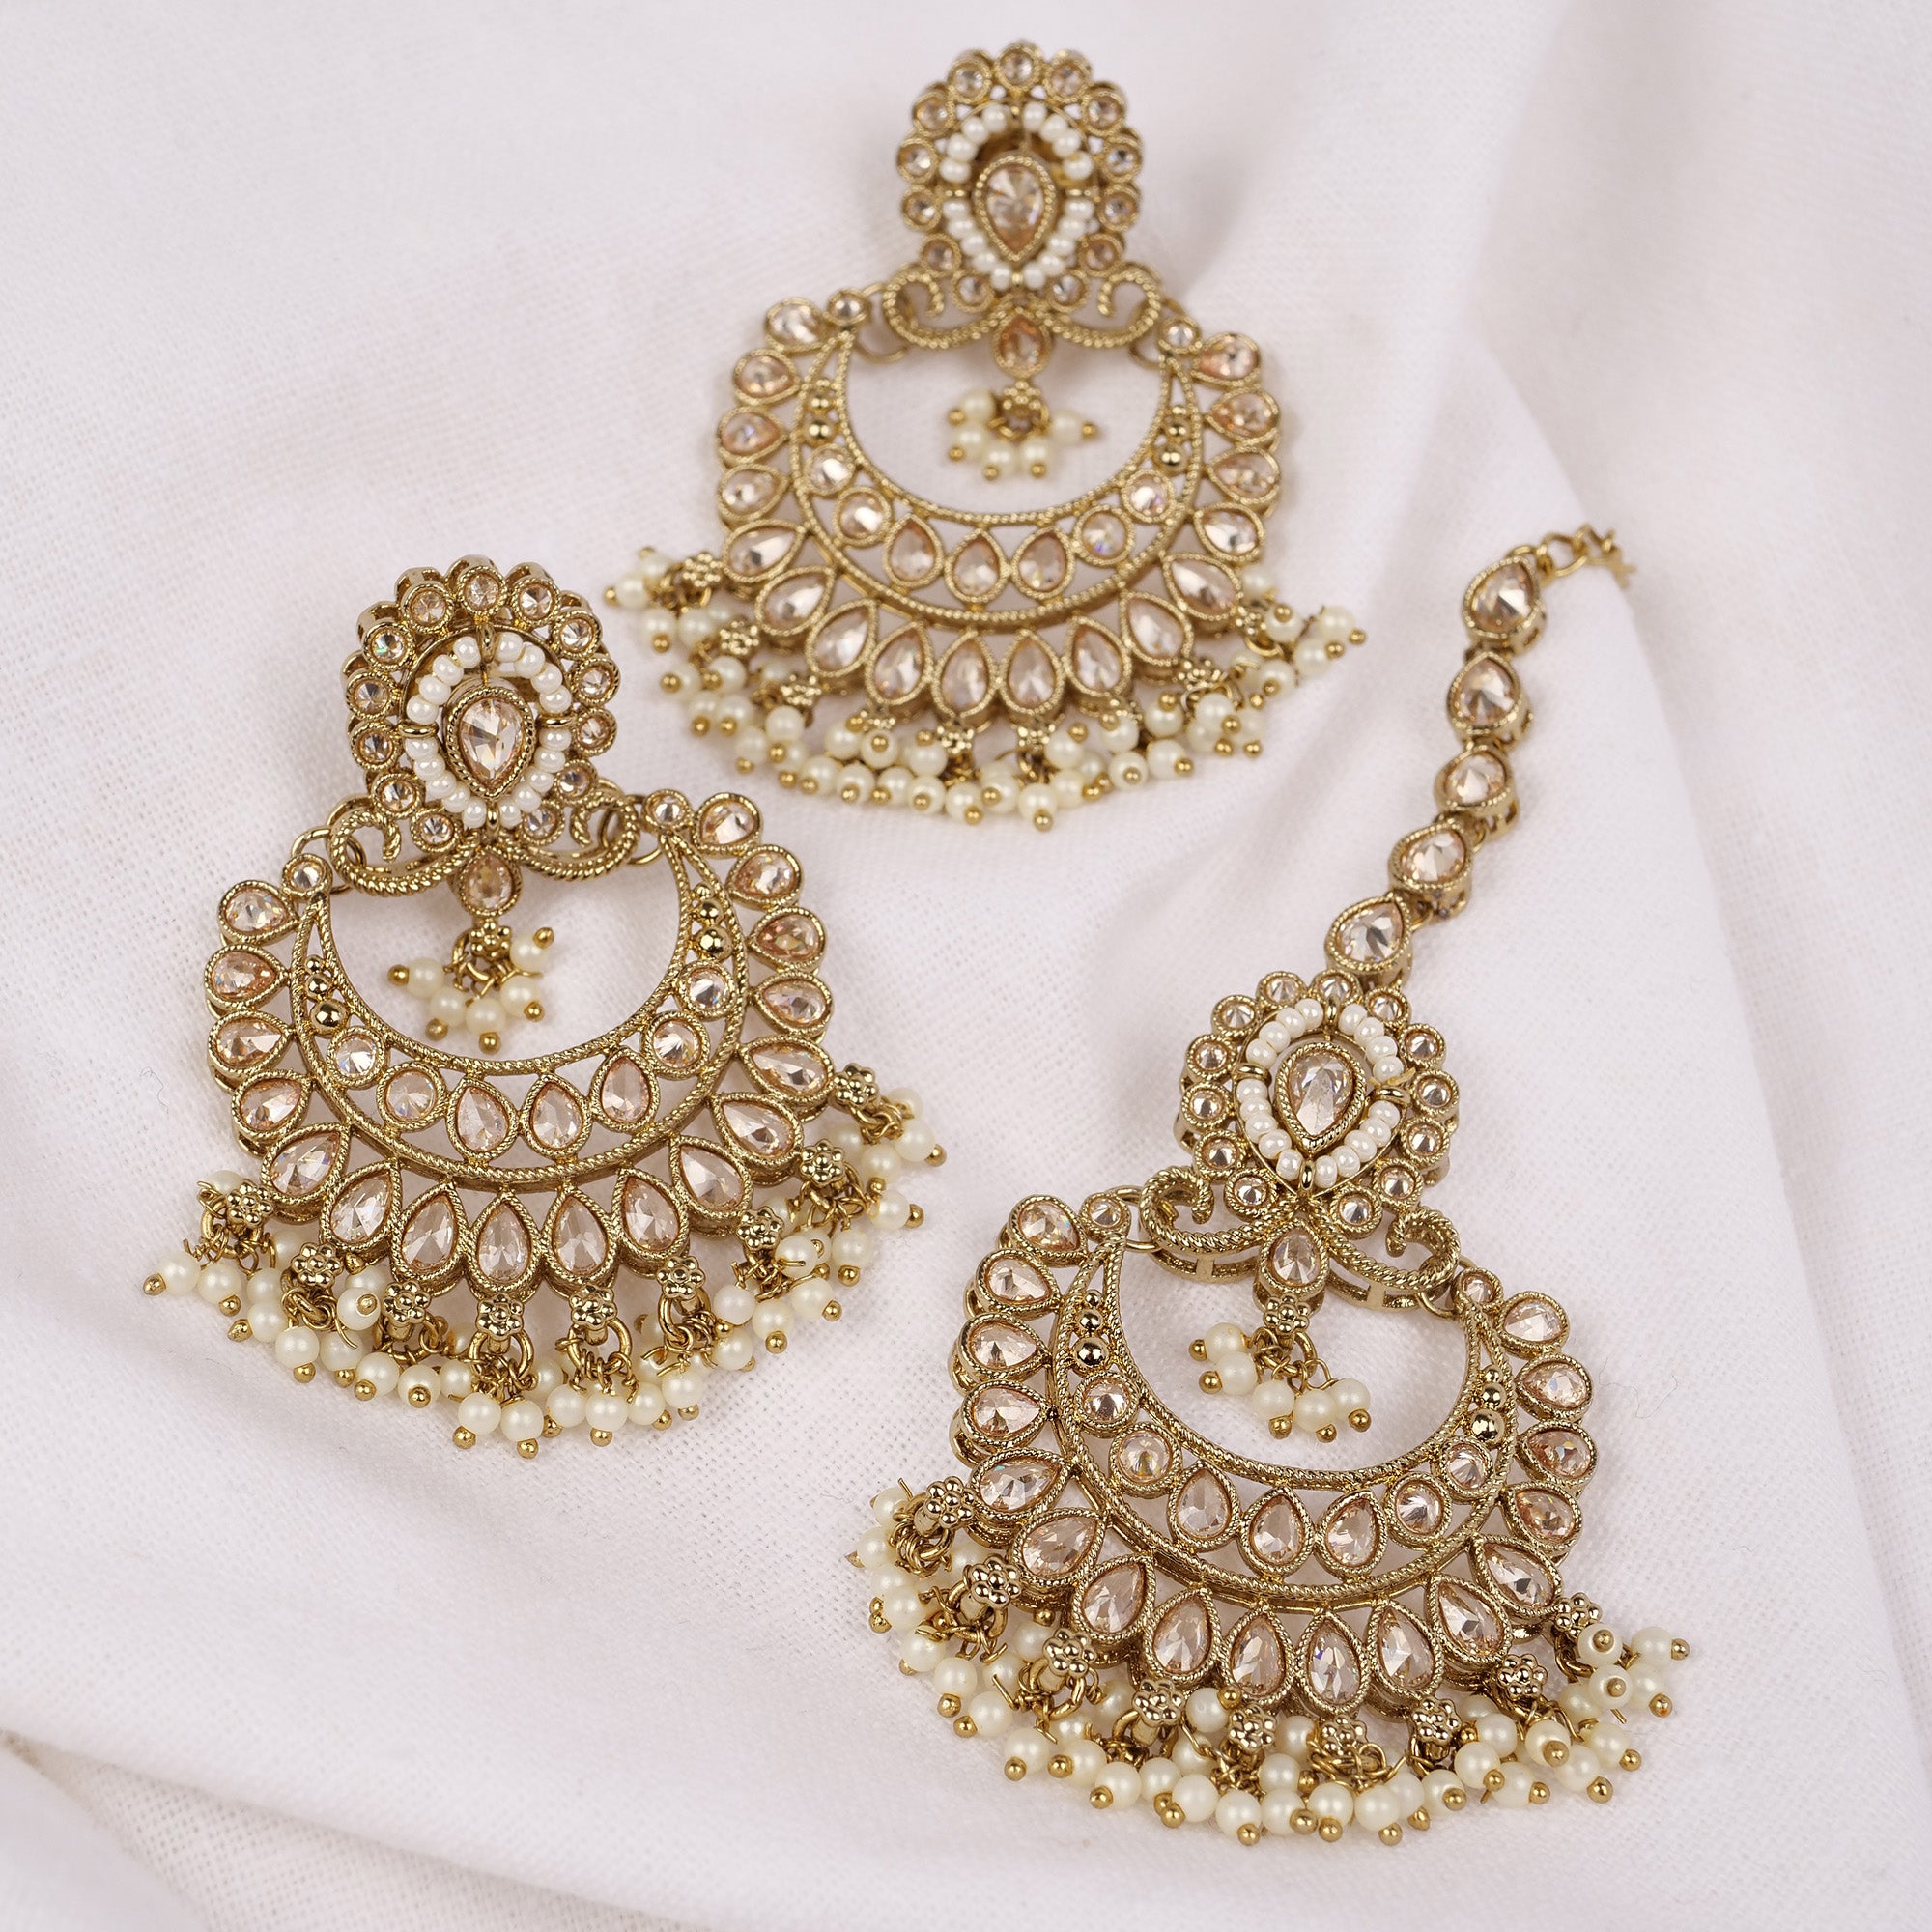 Raahi Pearl Chandbali Earrings in Antique Gold